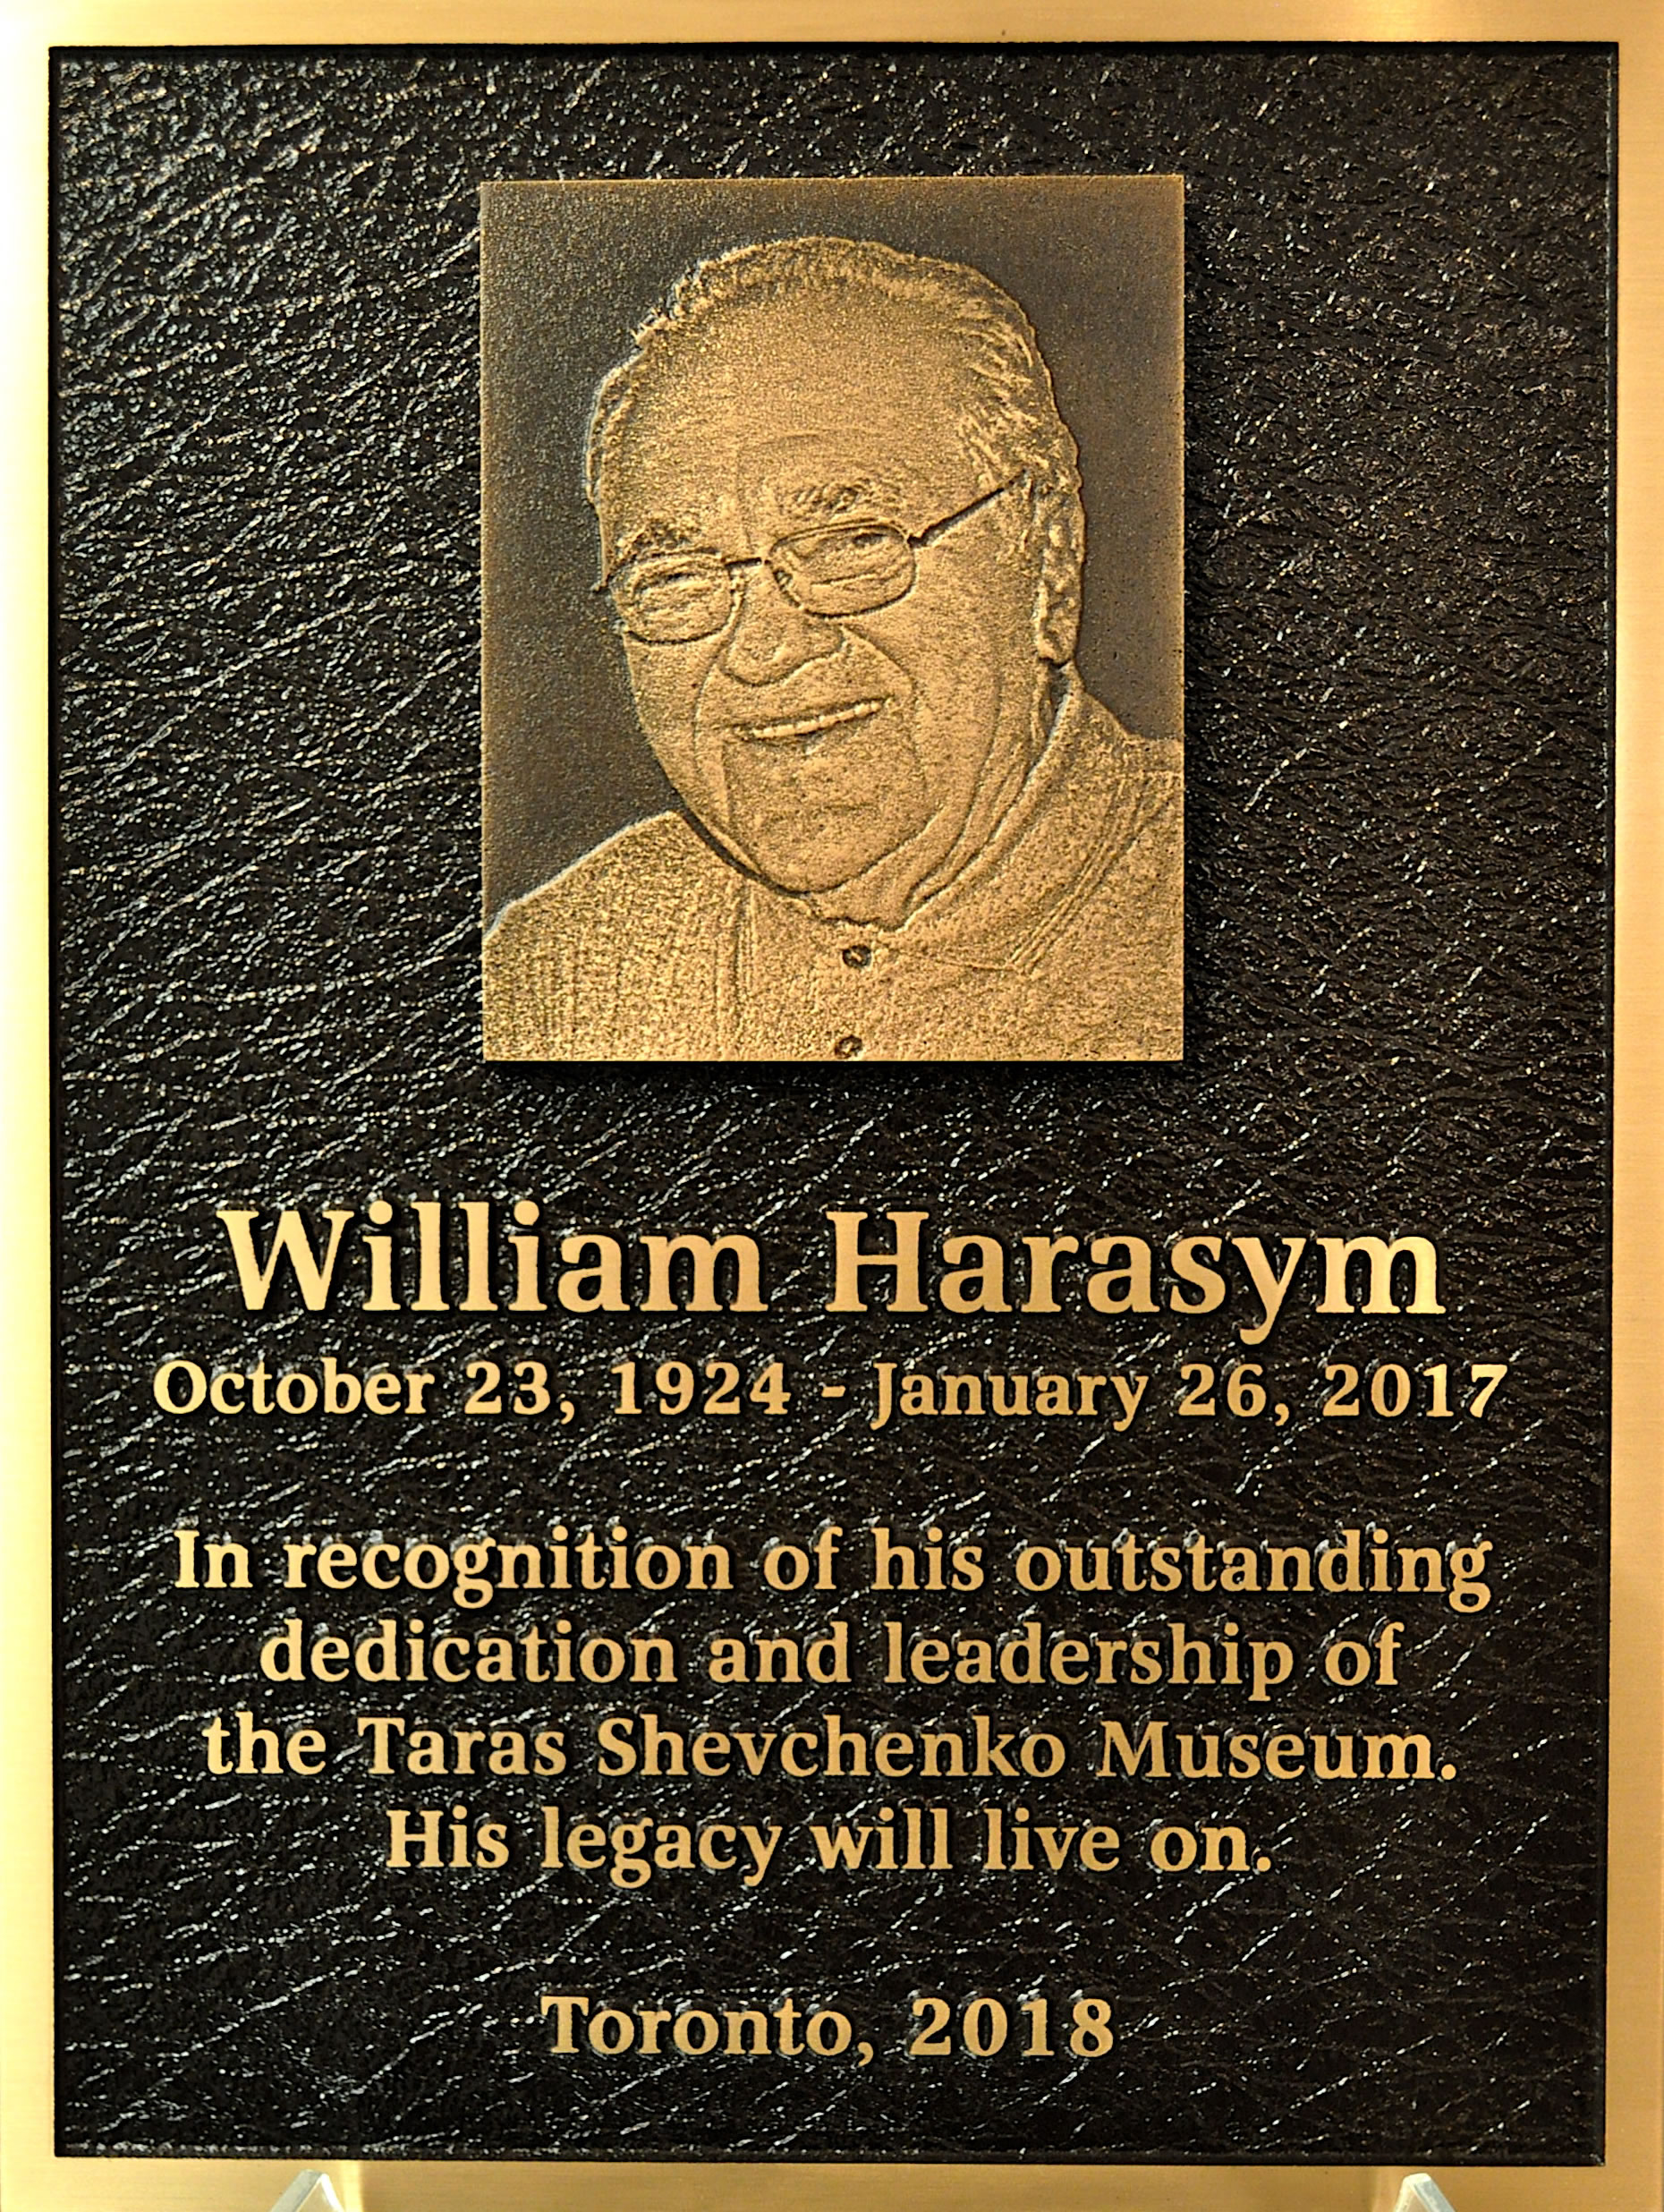  Unveiling a plaque honouring William Harasym